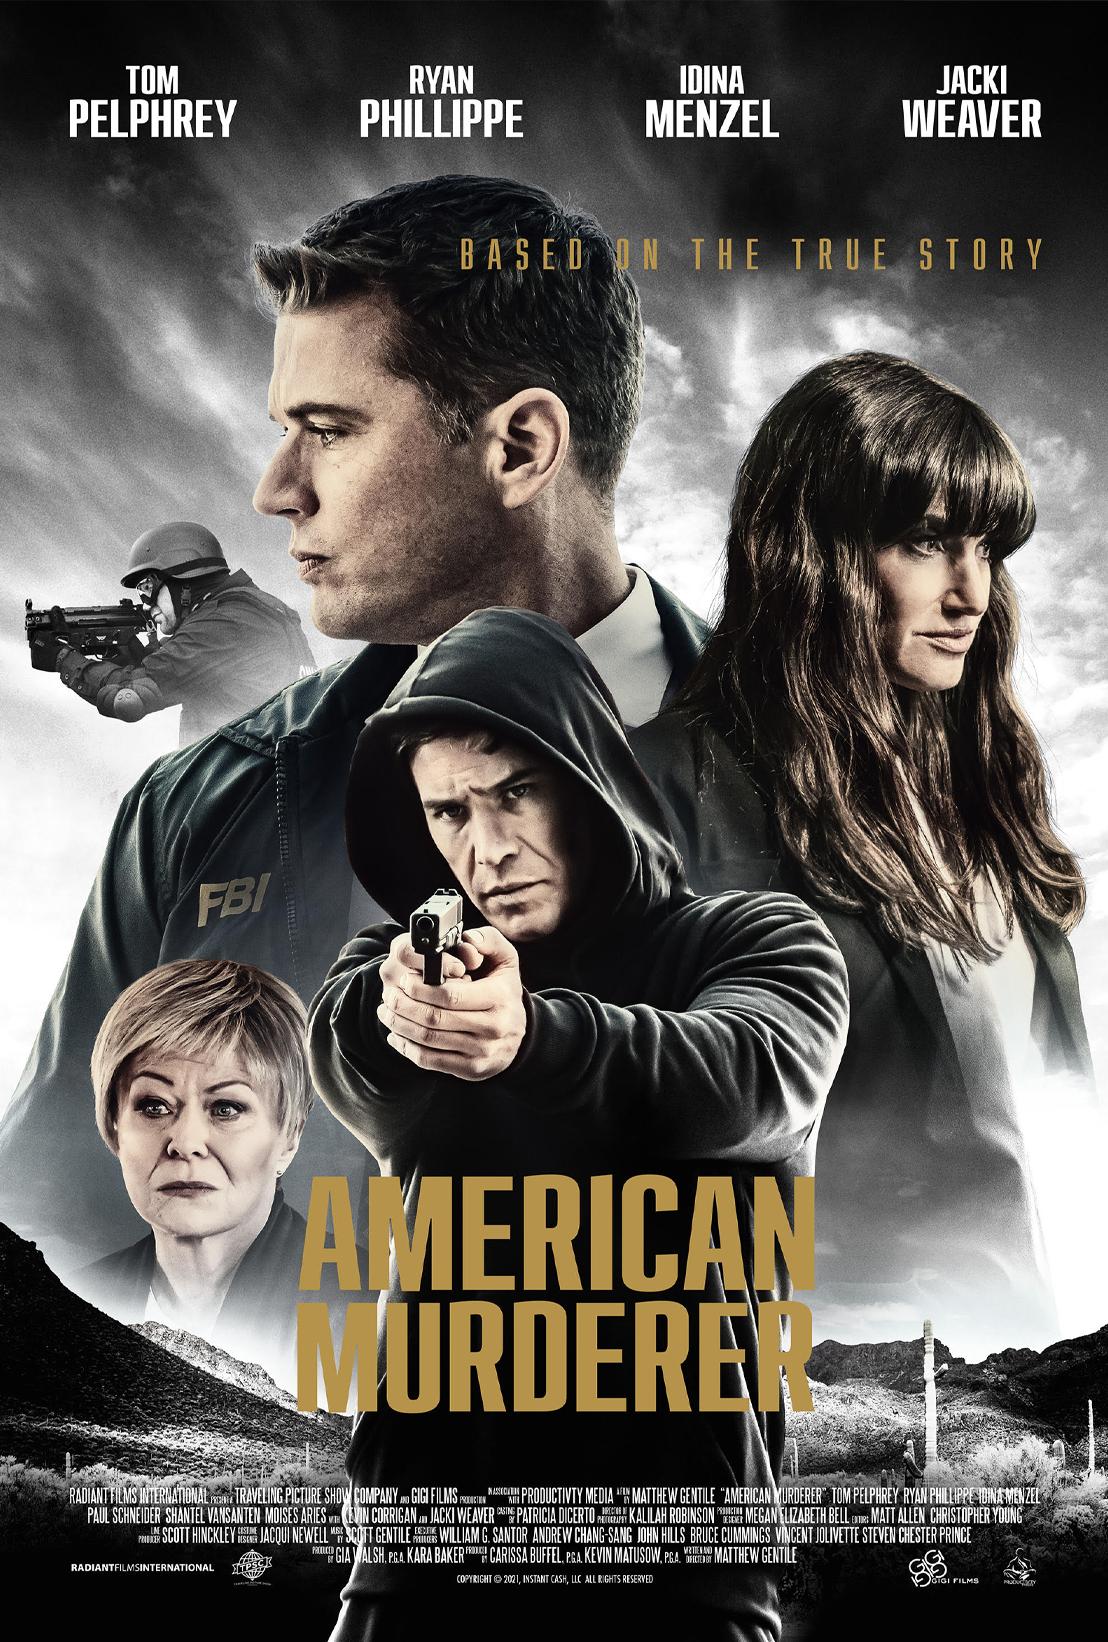 American Murderer Movie 2022, Official Trailer, Release Date